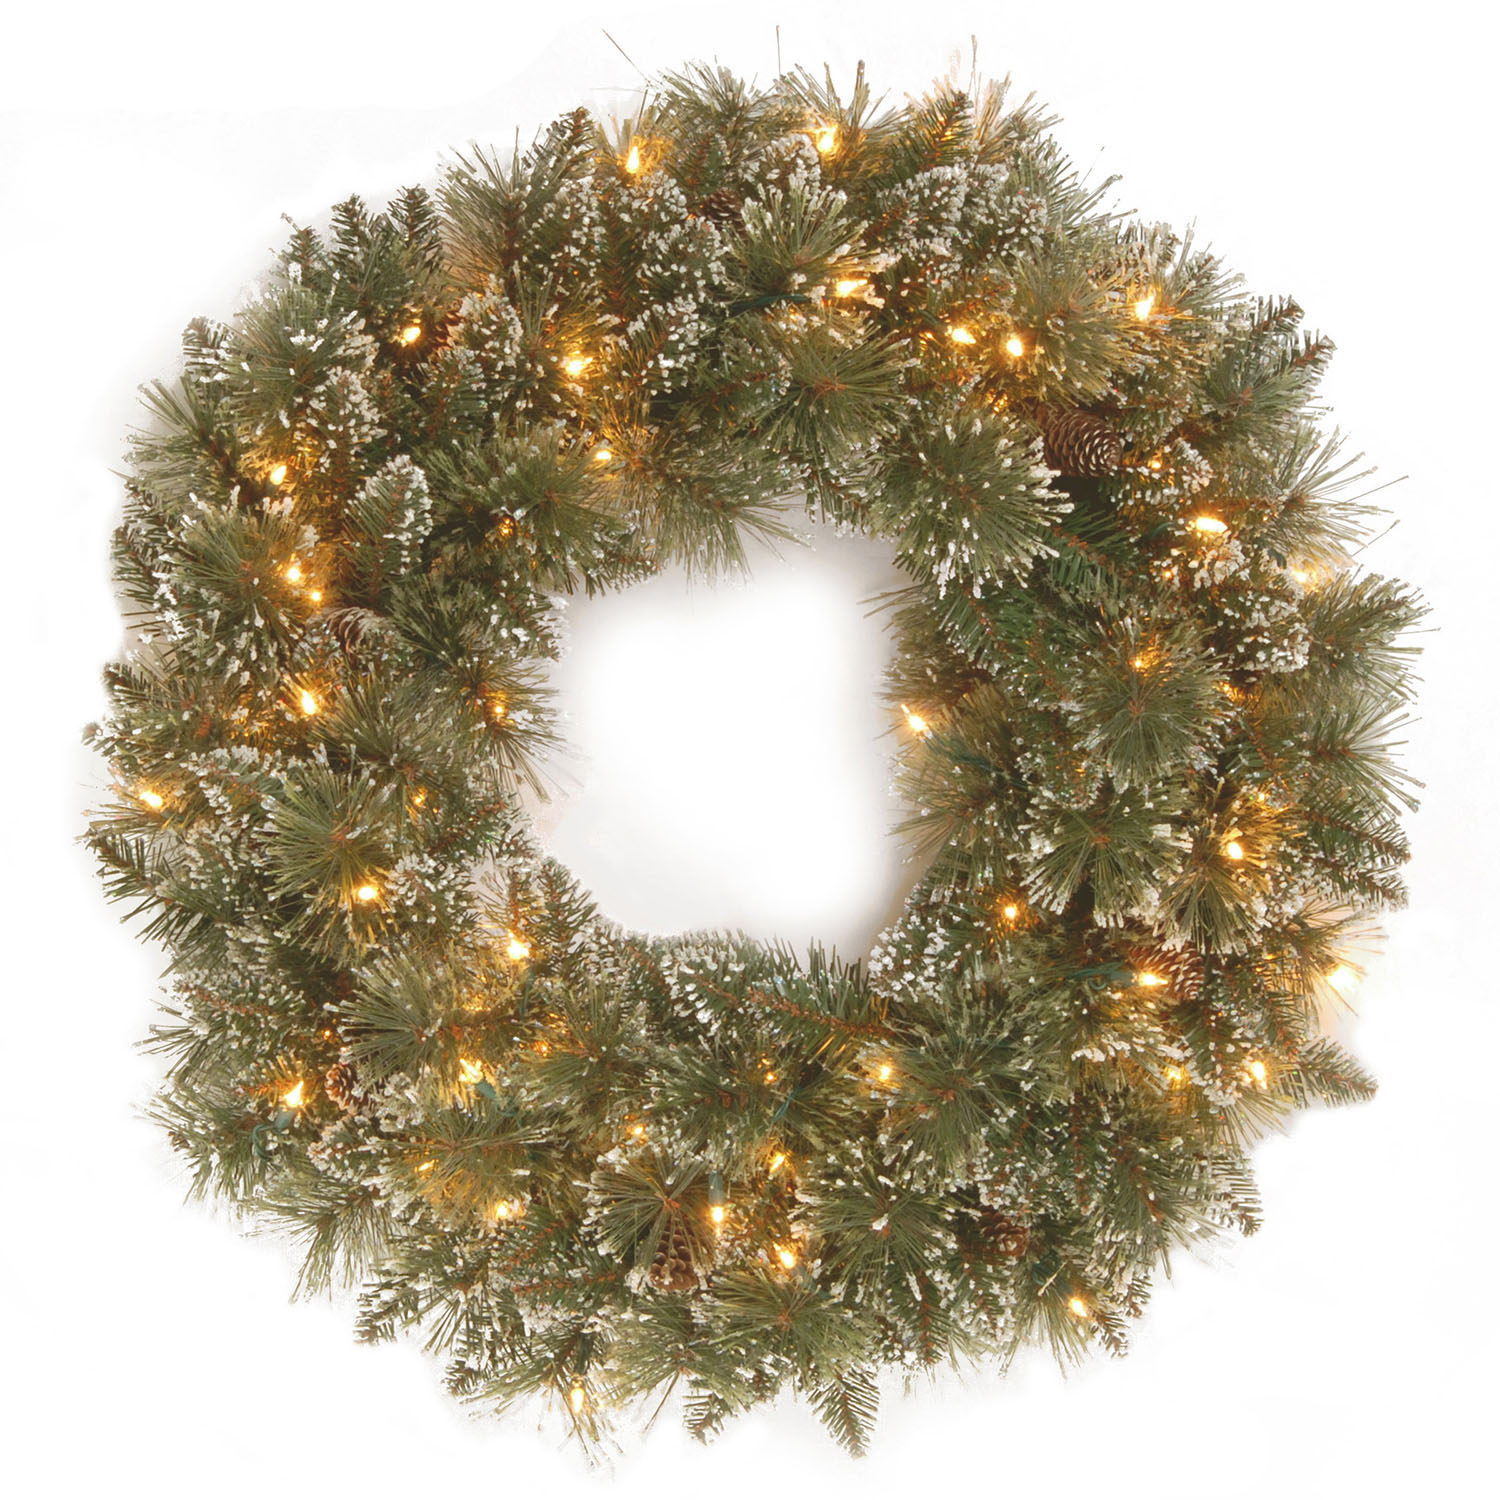 24 Inch Glittery Bristle Pine Wreath: Clear Lights